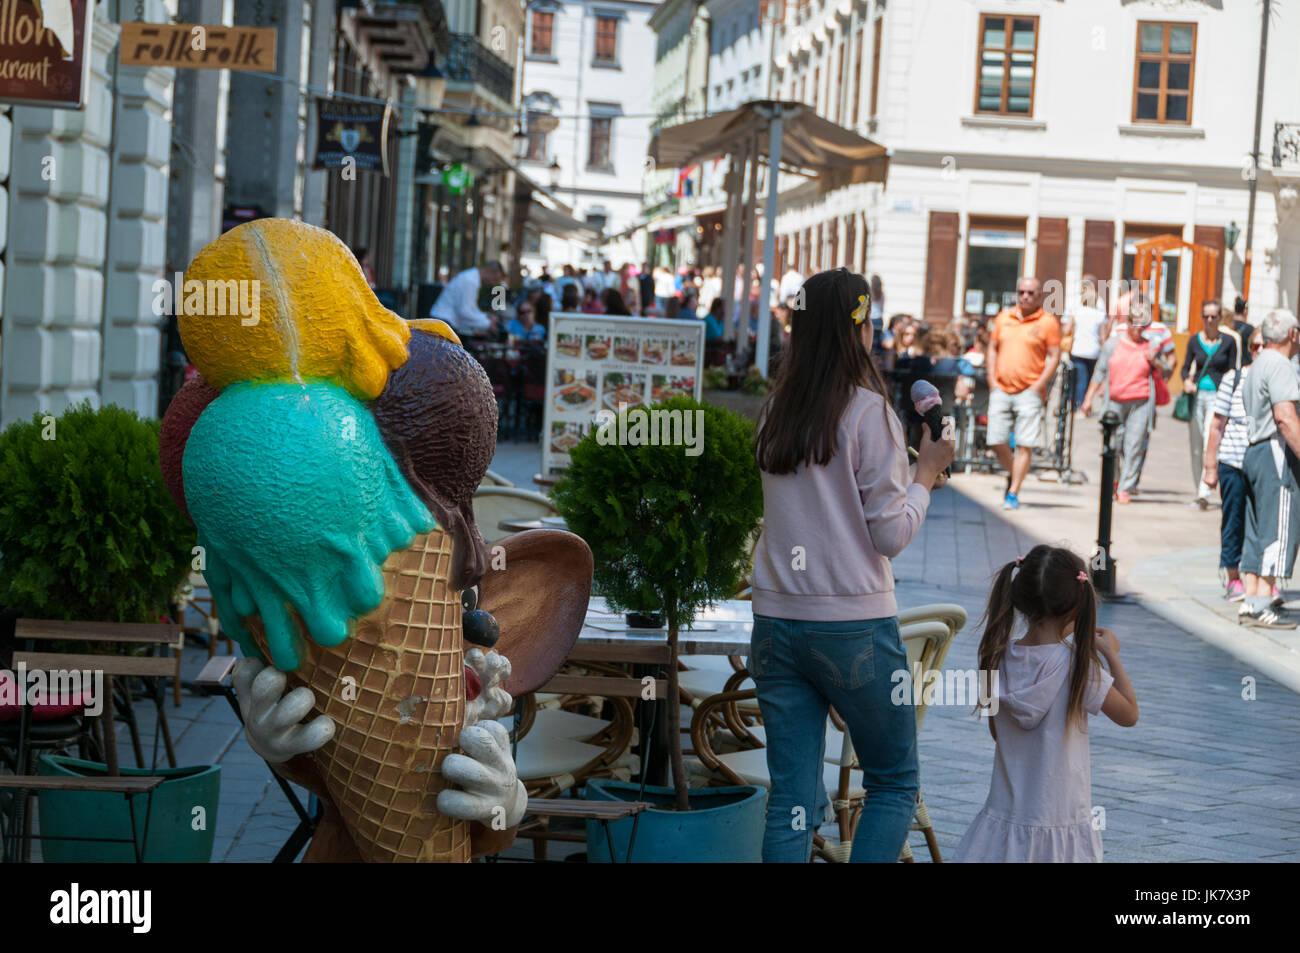 Ice cream in Old Town, Main Square, Bratislava, Slovakia Stock Photo